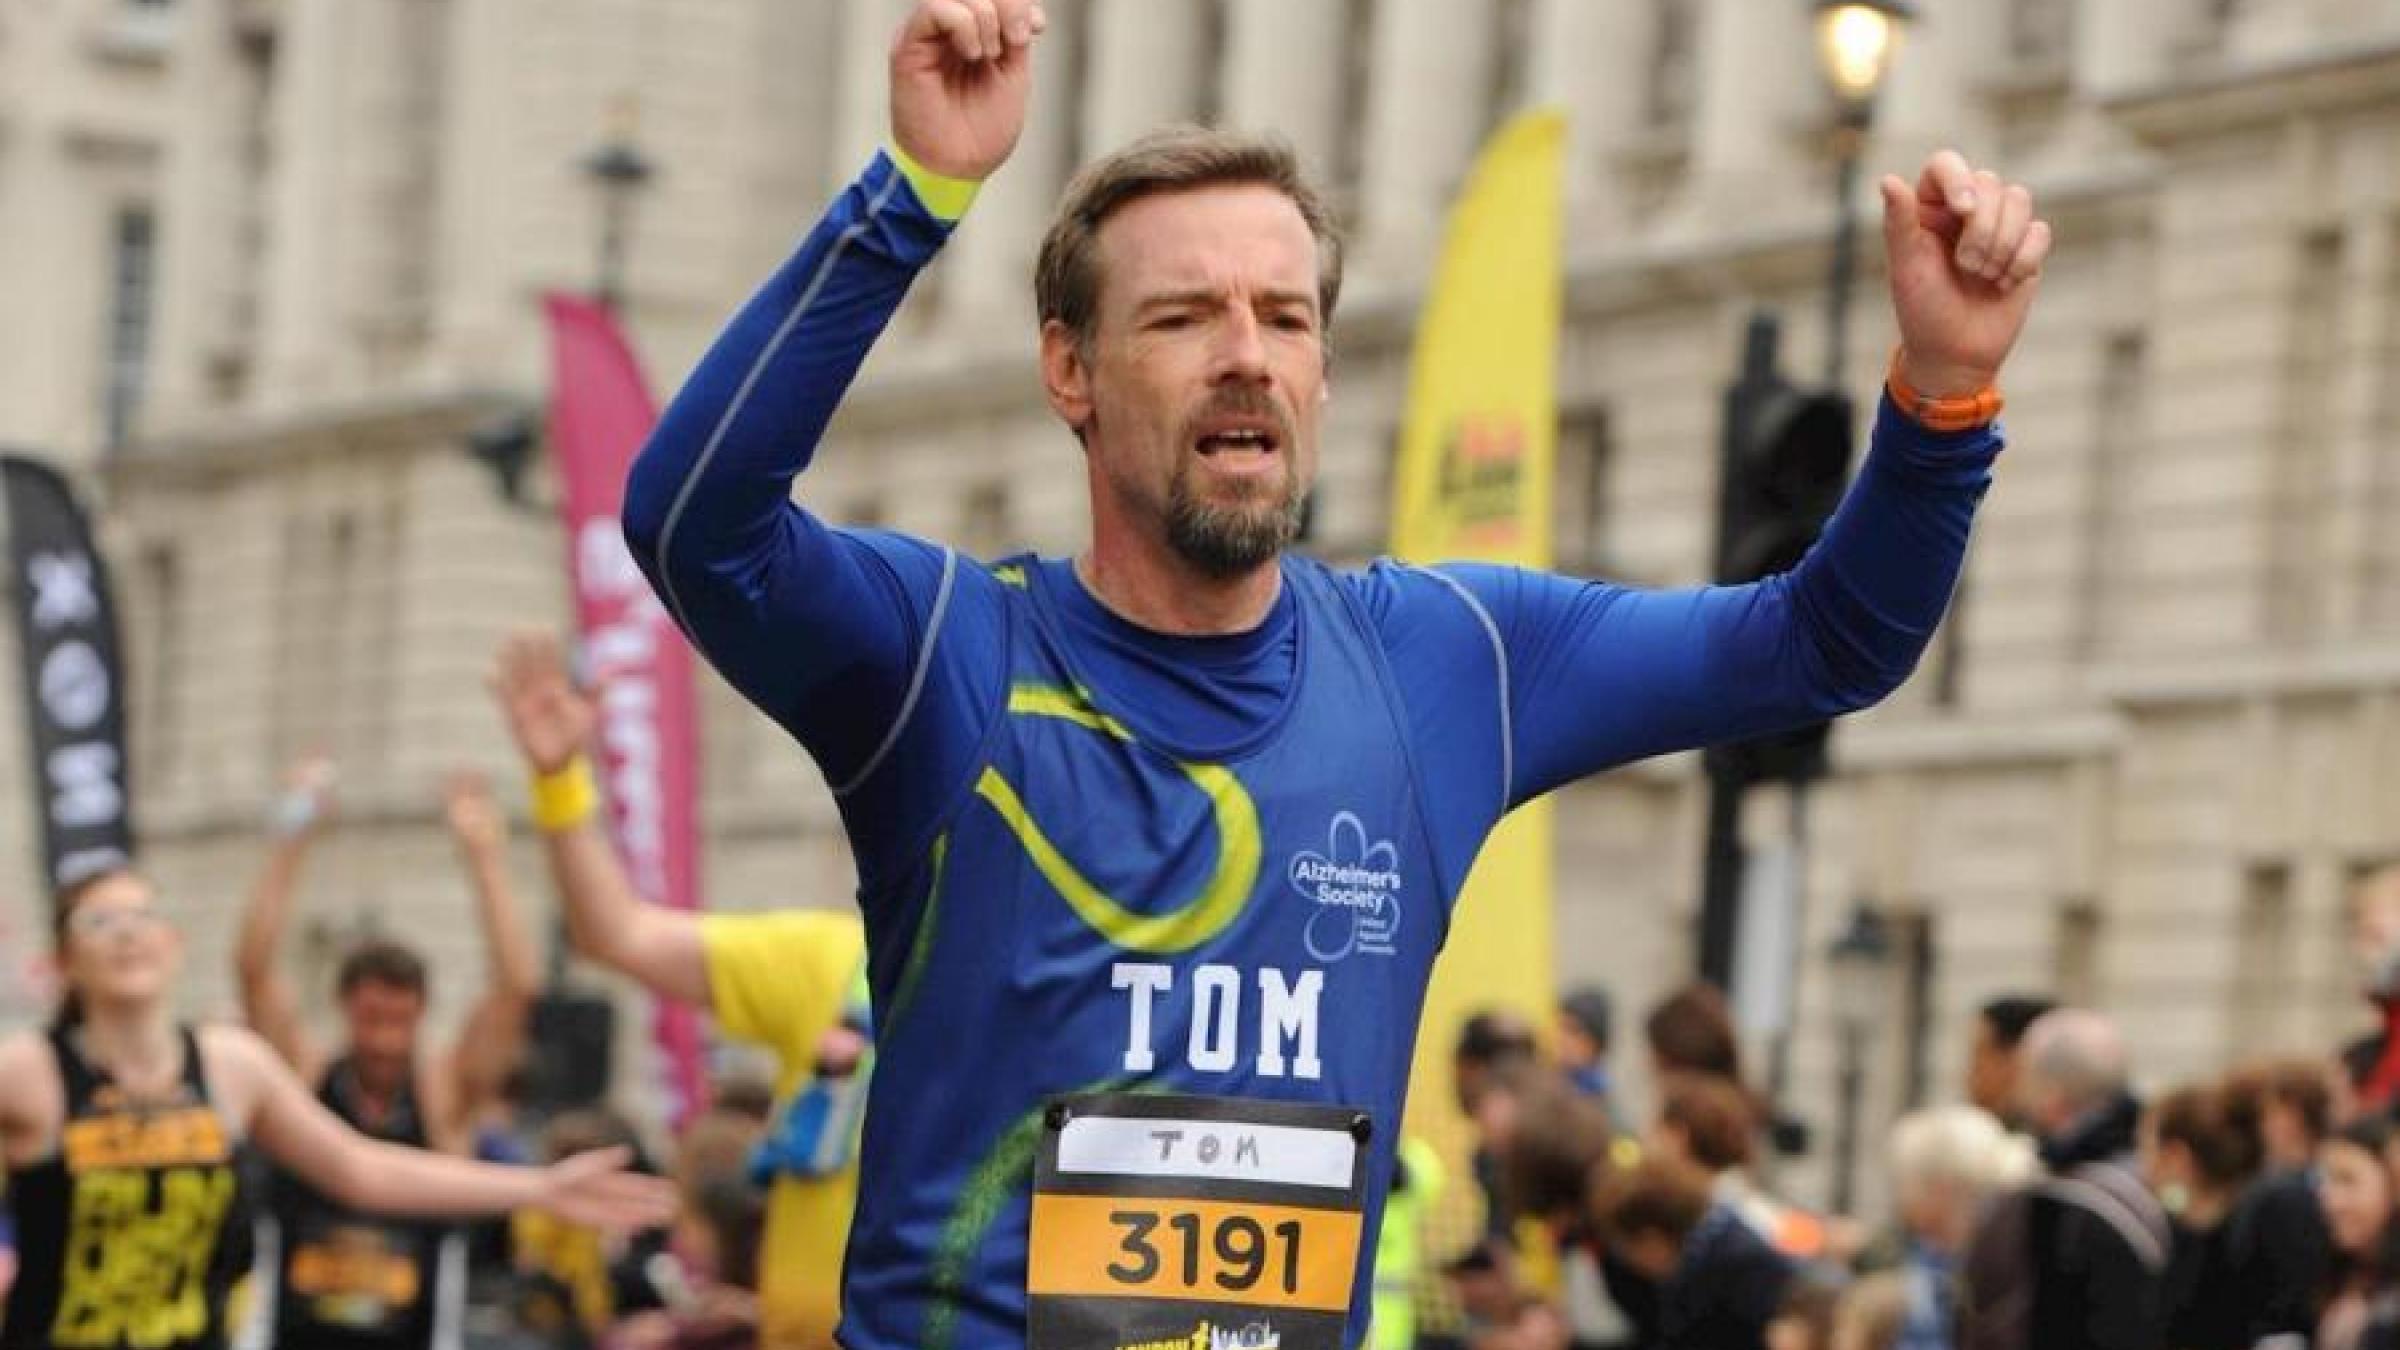 Thomas Johnson running the London Landmarks Half Marathon